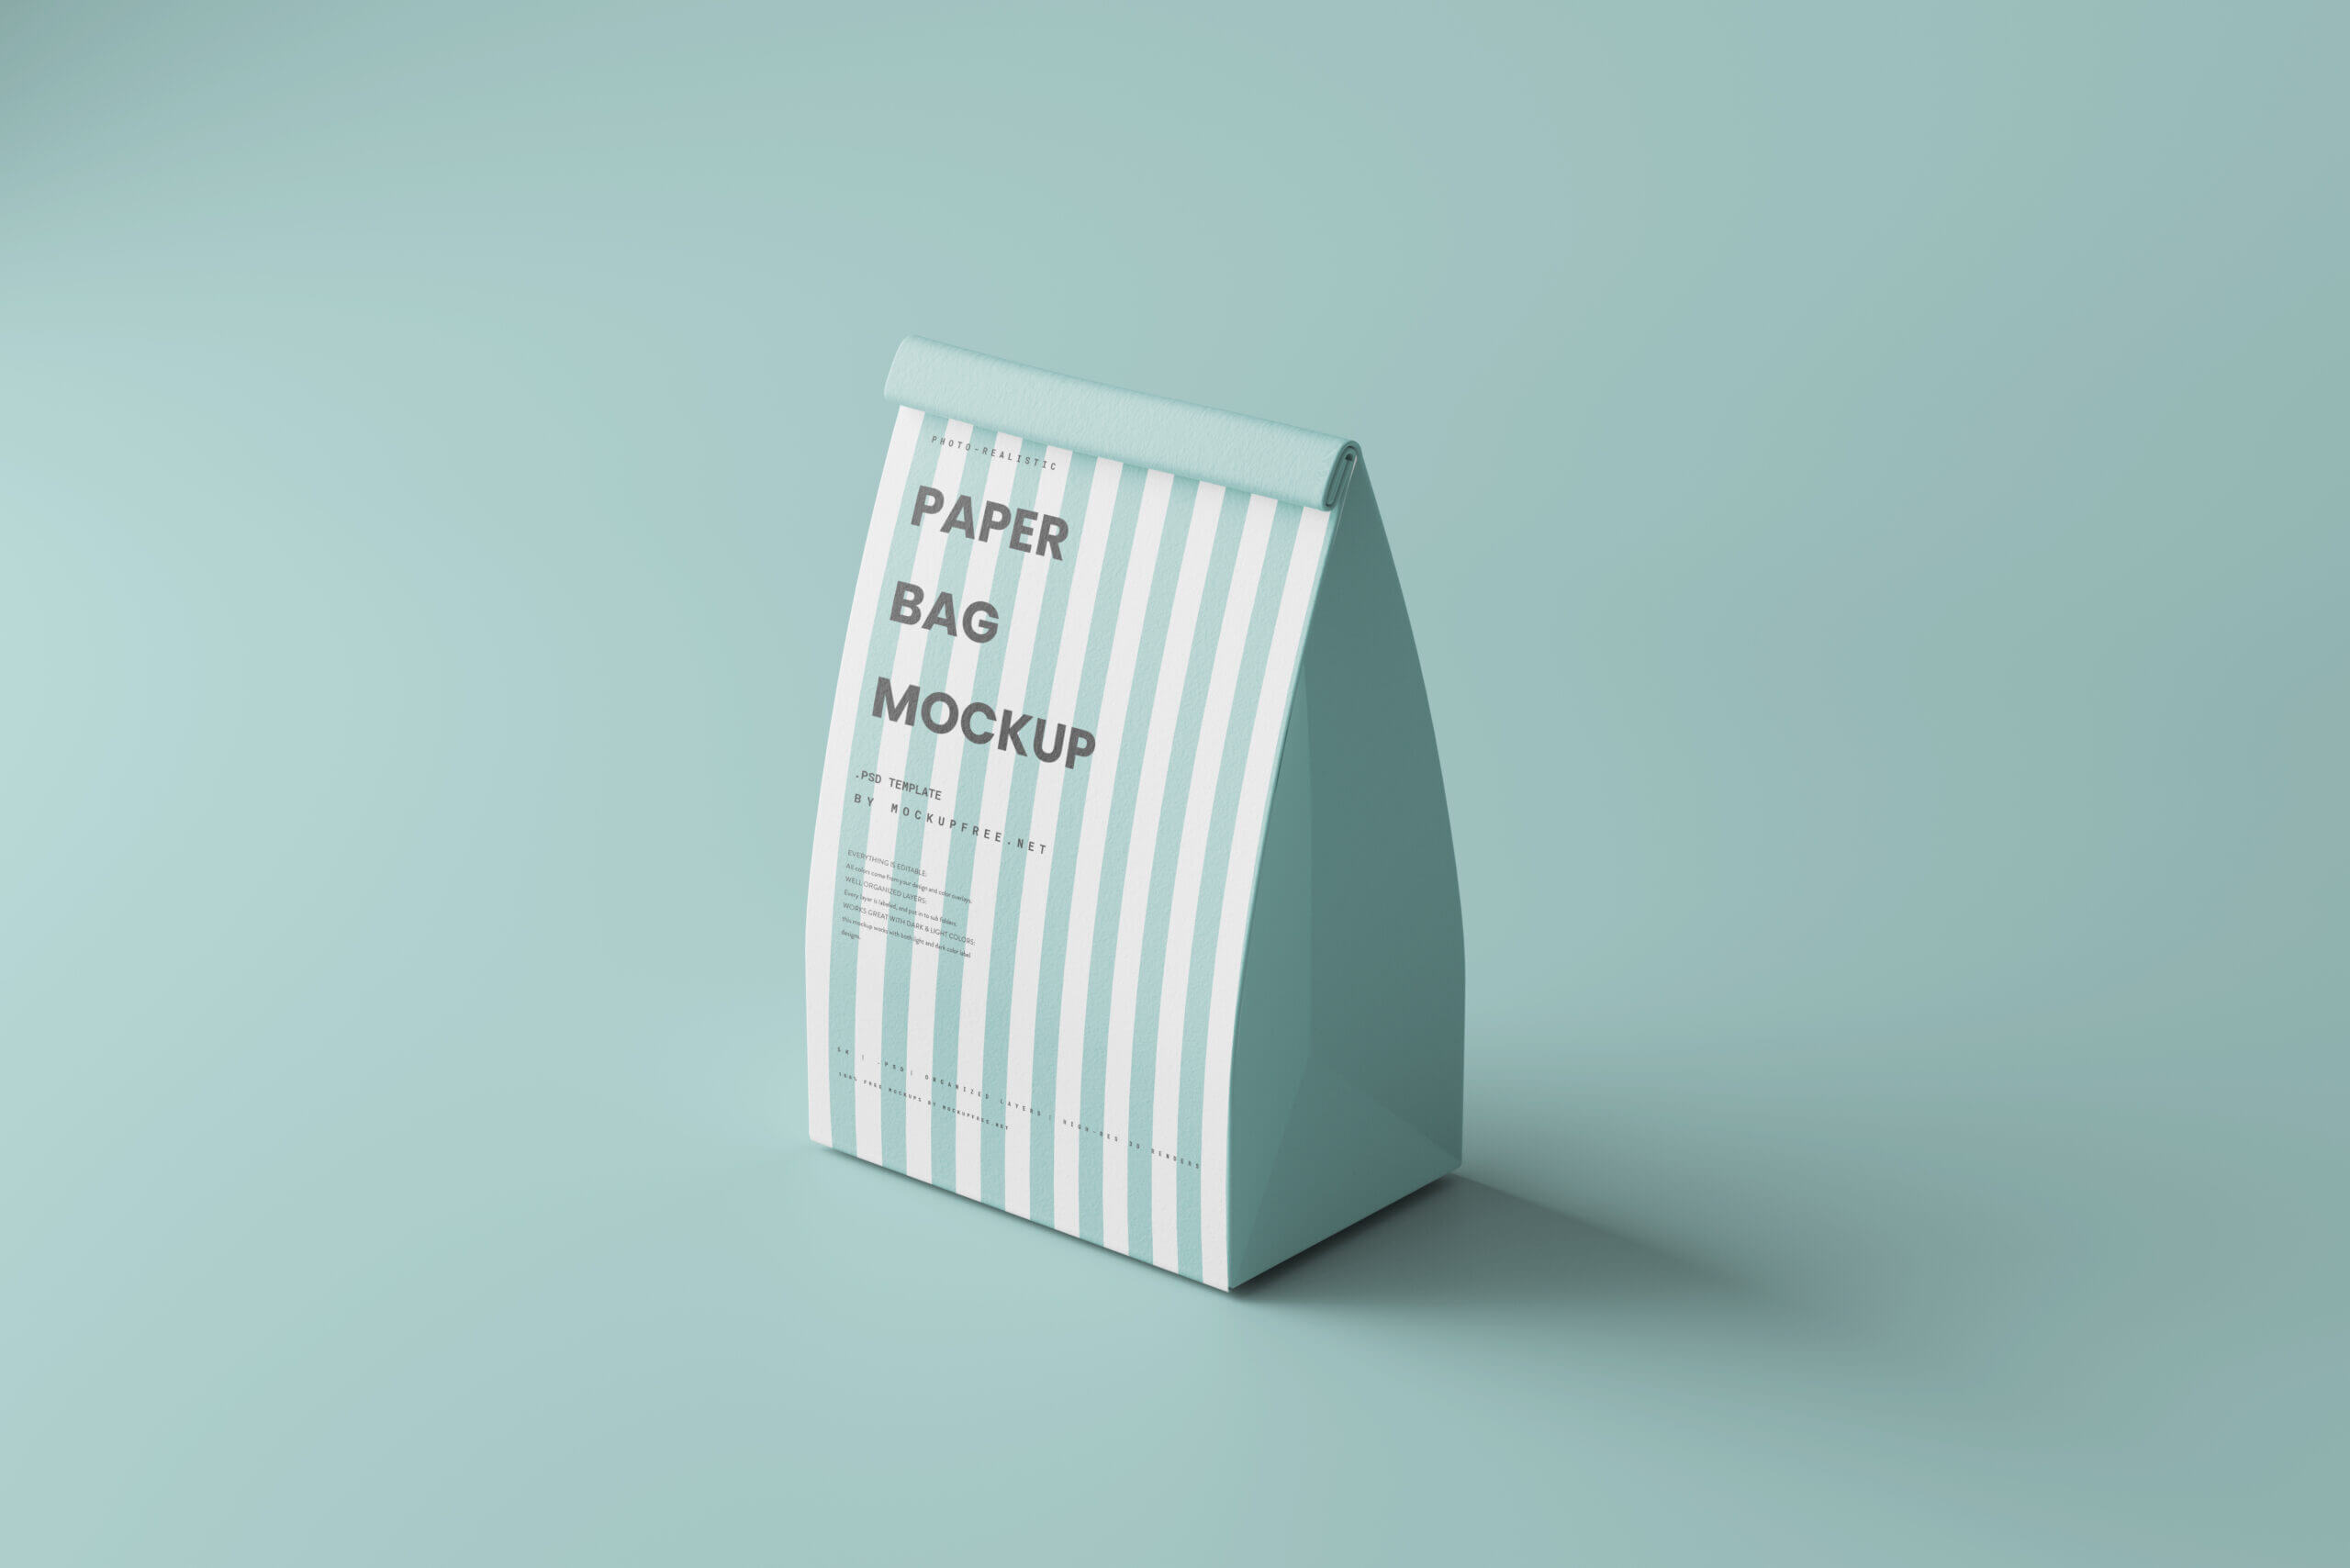 10 Free Disposable Paper Standing Food Bag Mockup PSD Files4